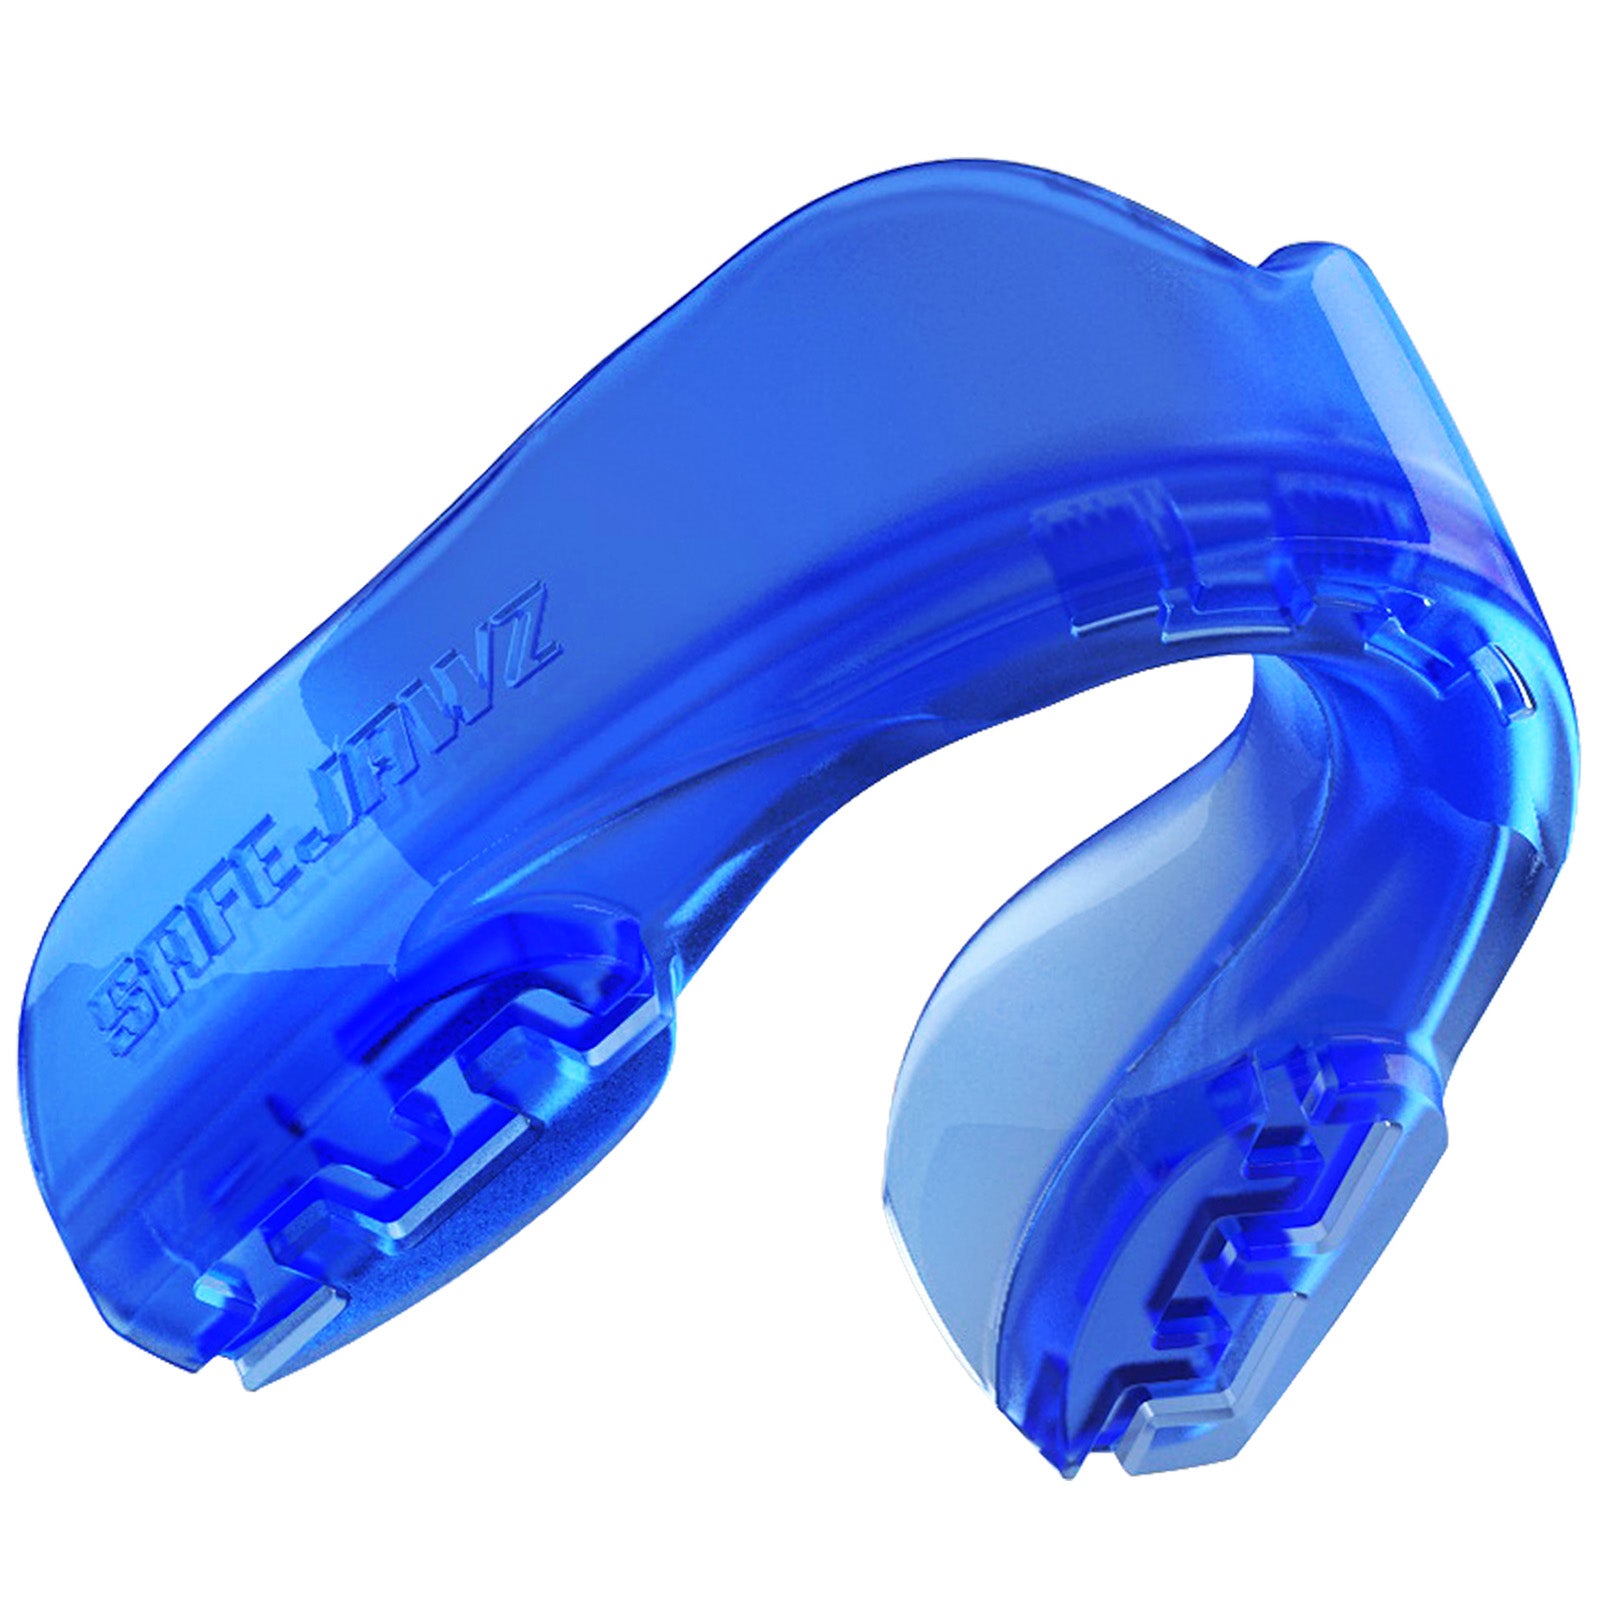 SAFEJAWZ® Extro Series 'ICE' Mouthguard - SAFEJAWZ gum shield